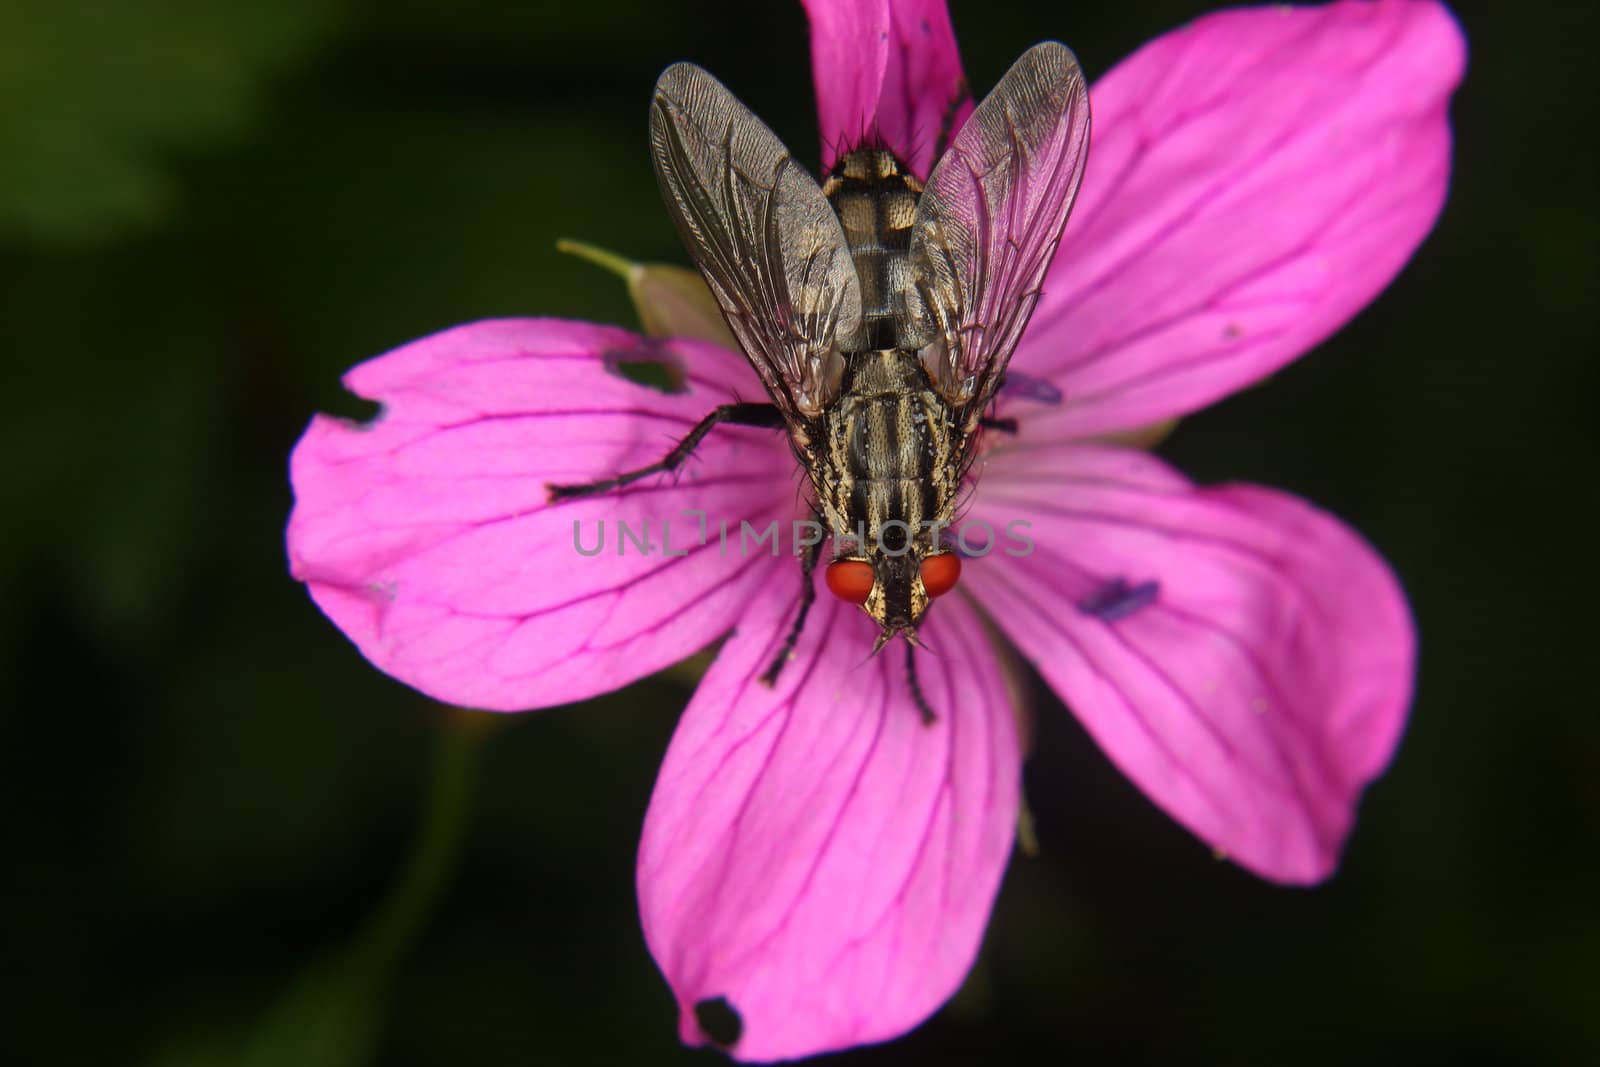 Blowfly (Calliphoridae) by tdietrich